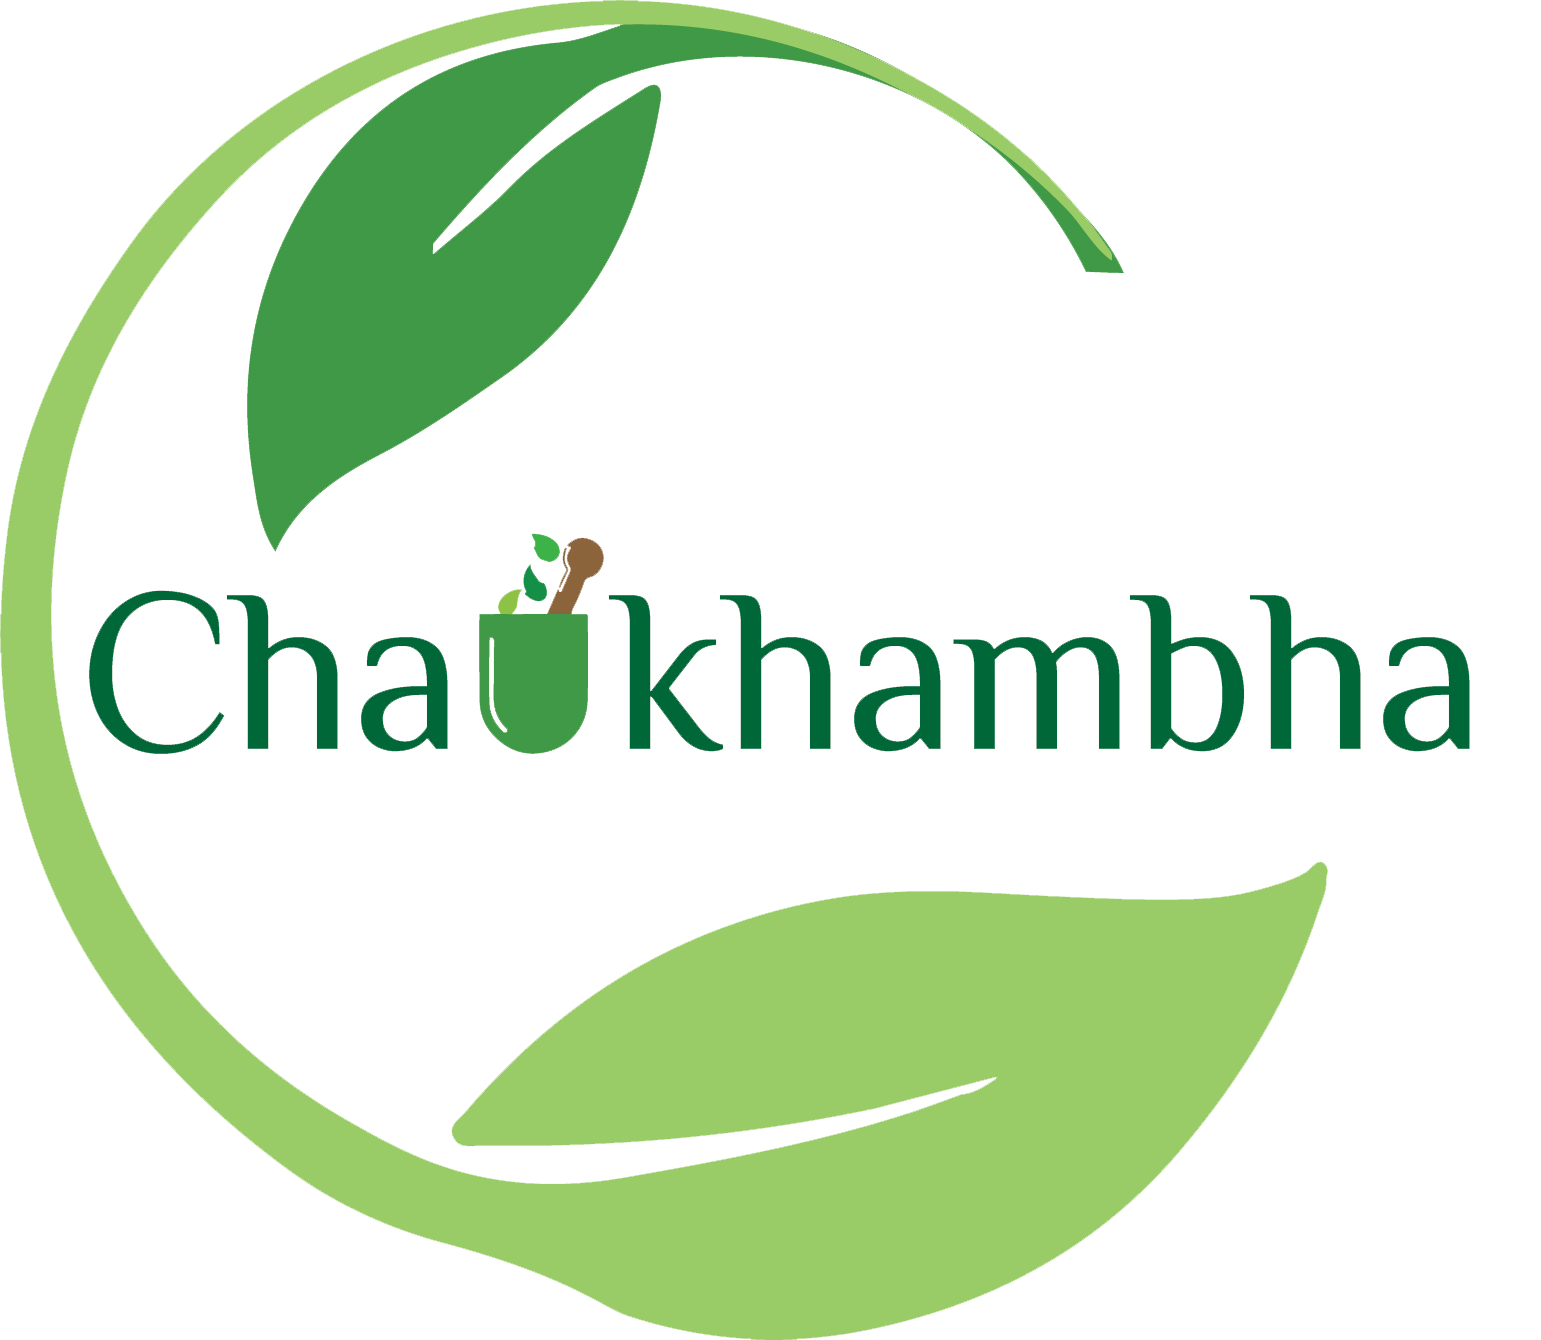 Chaukhambha Healthcare